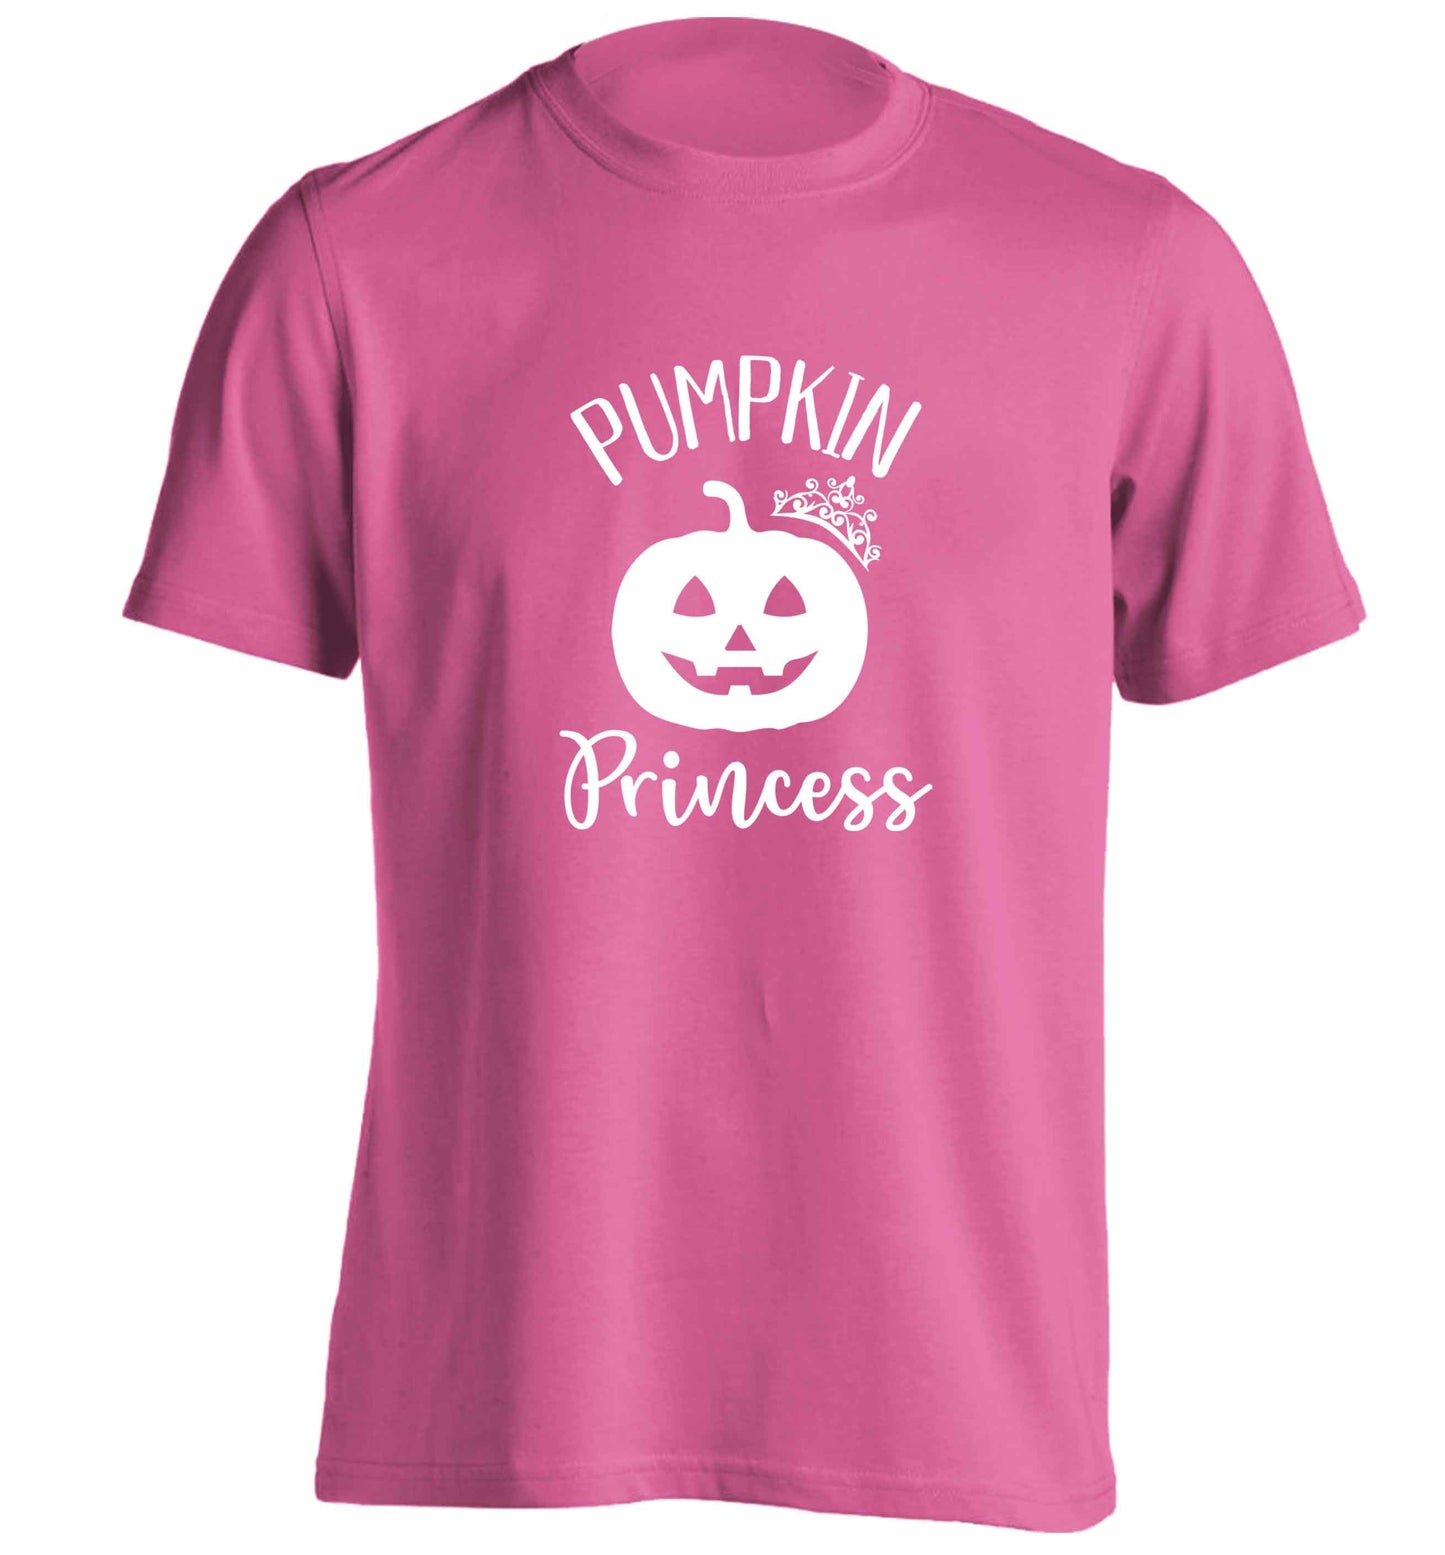 Happiness Pumpkin Spice adults unisex pink Tshirt 2XL